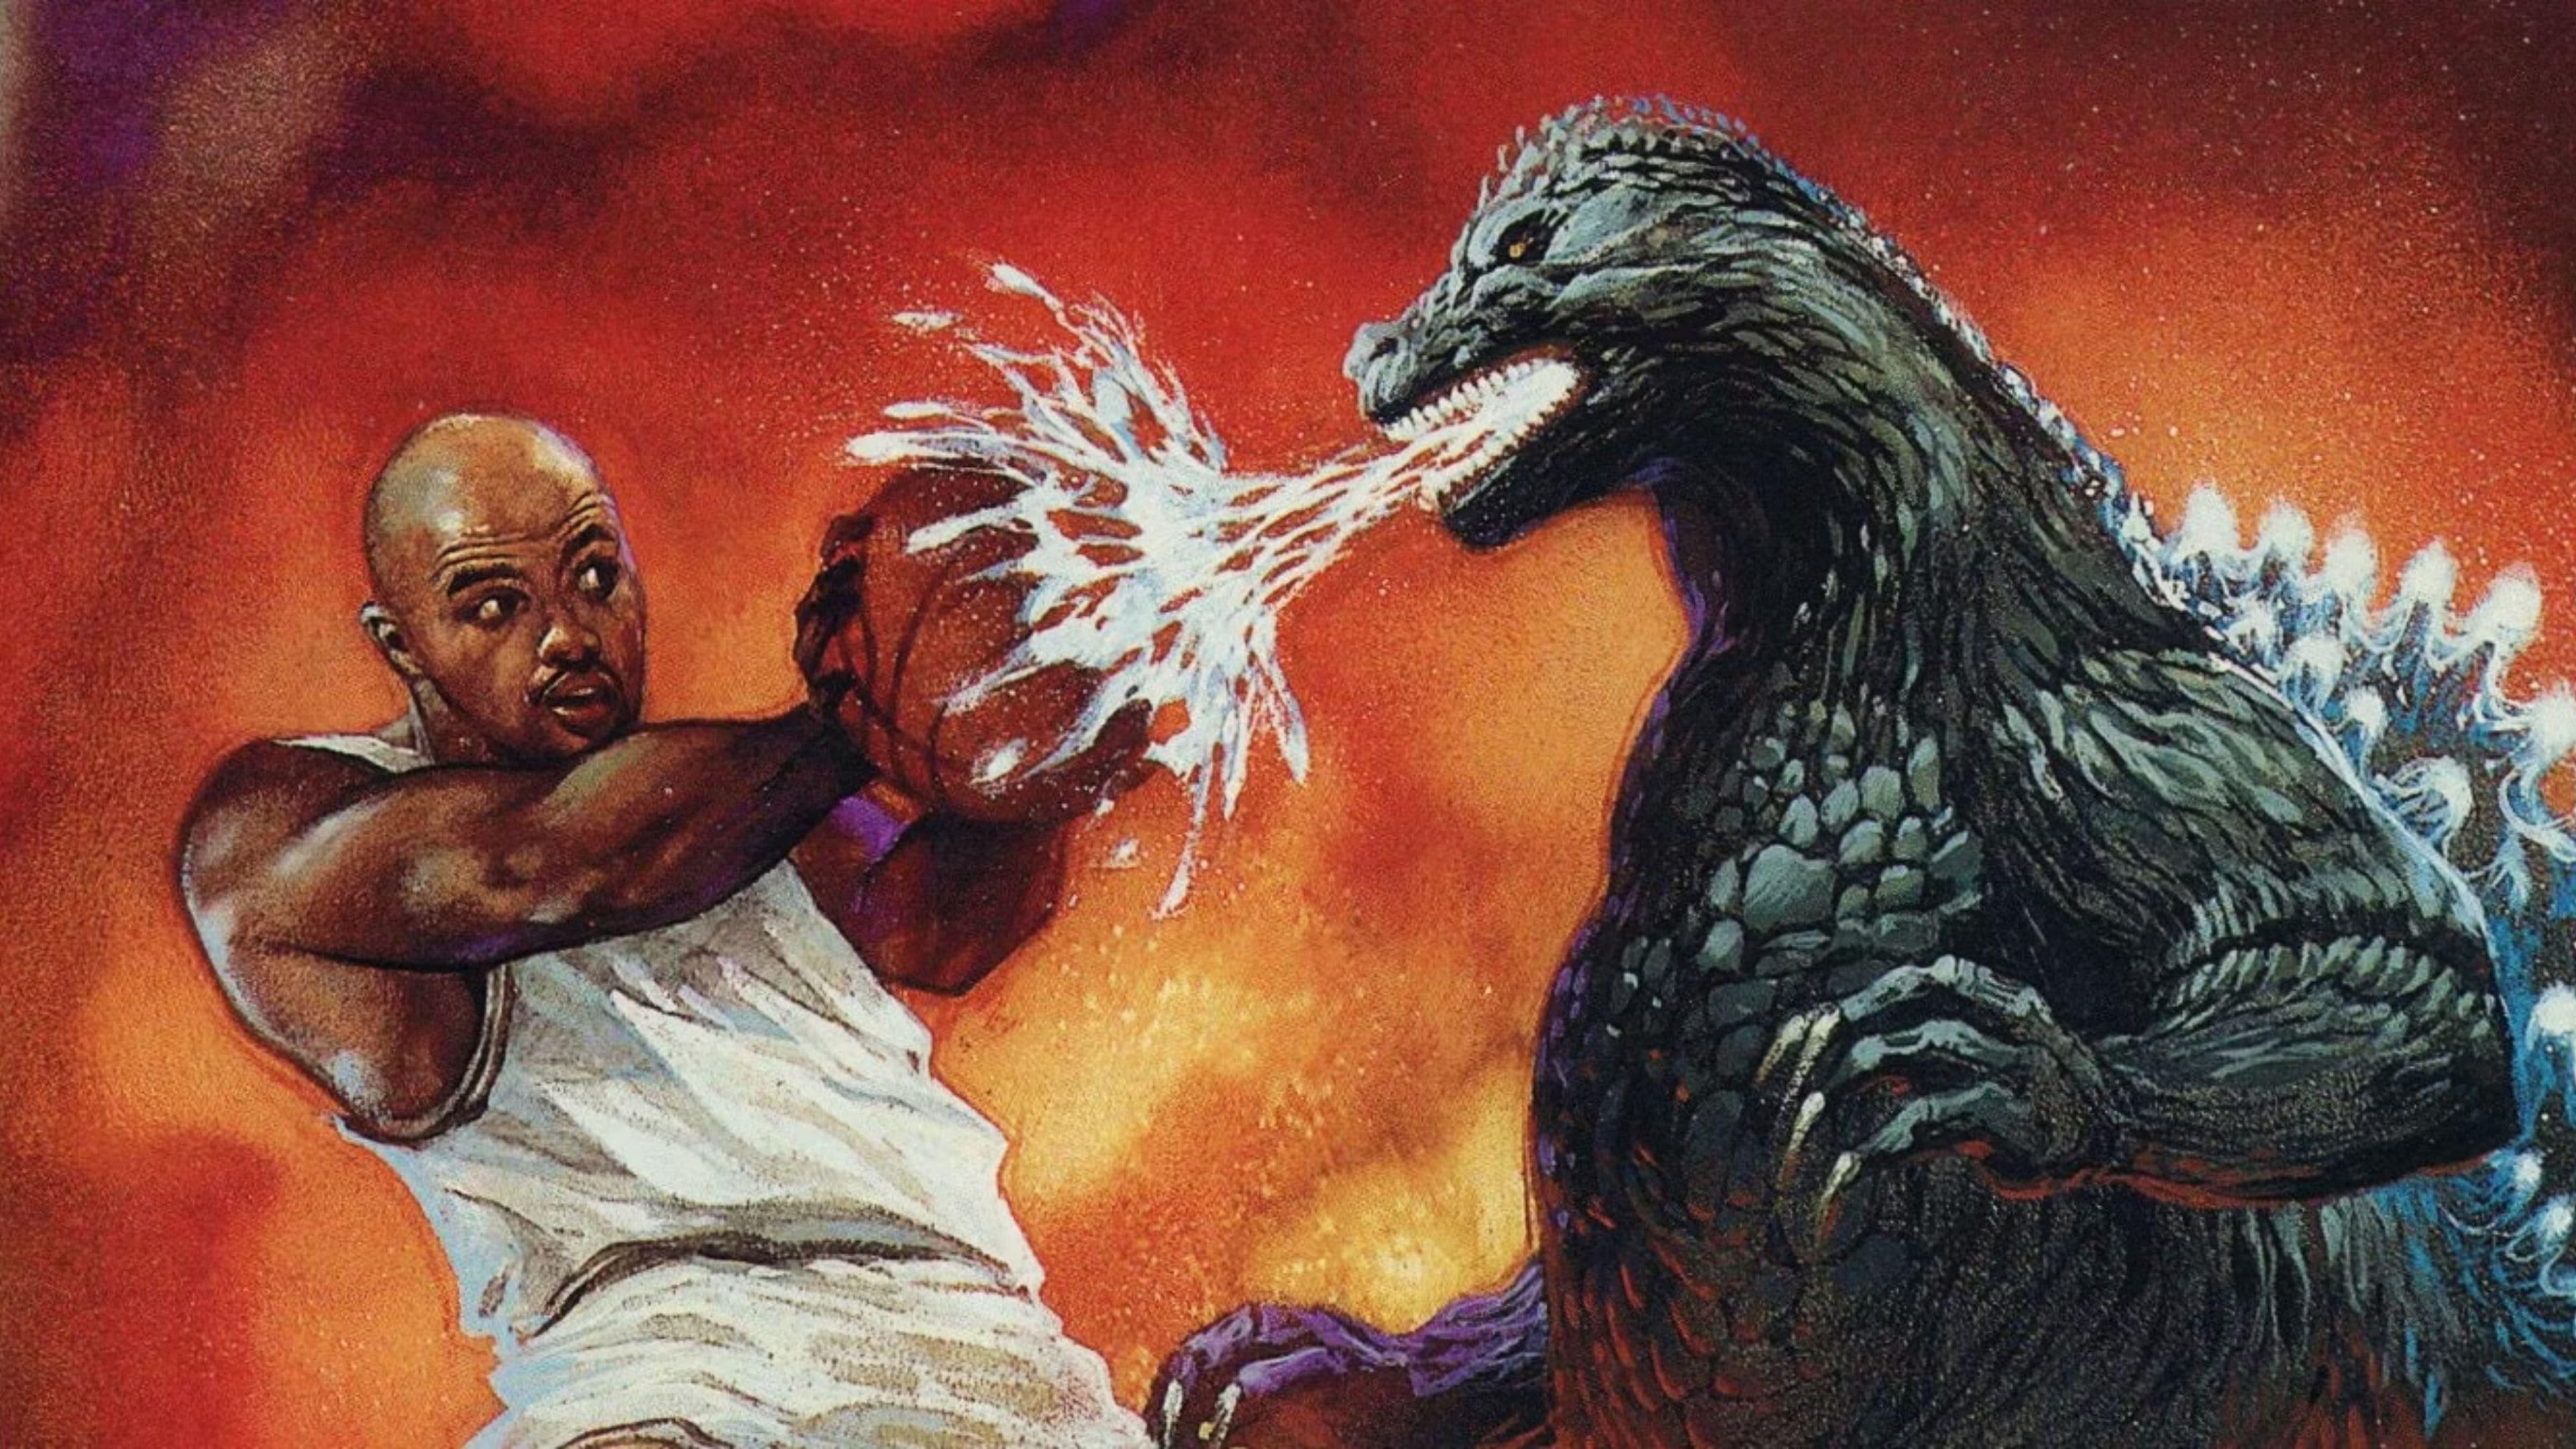 Godzilla vs. Charles Barkley backdrop